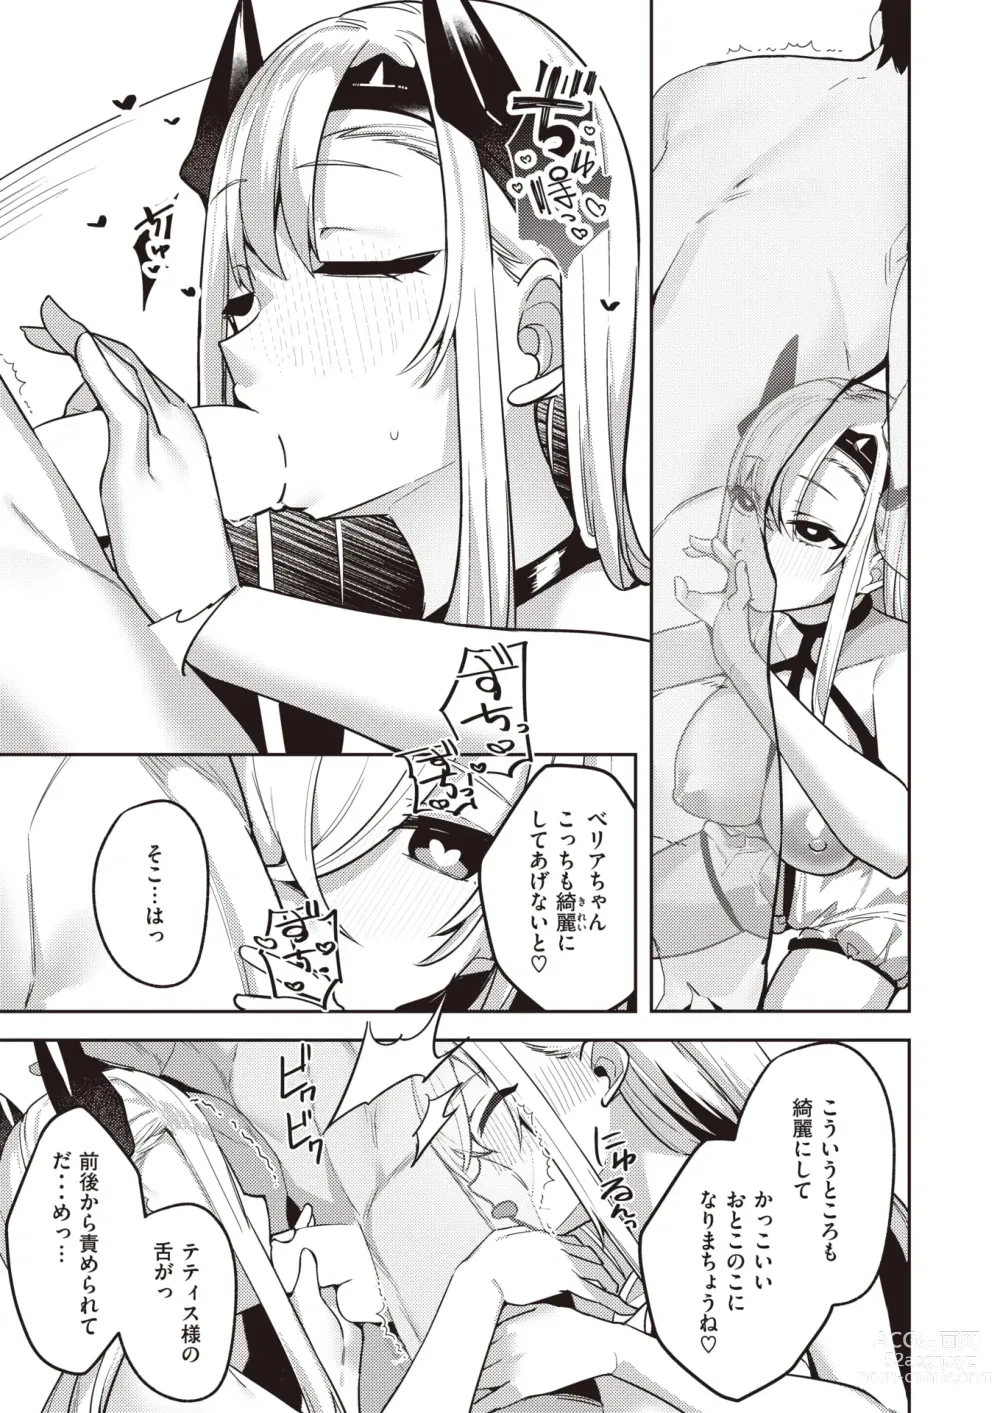 Page 56 of manga Isekai Rakuten Vol. 29